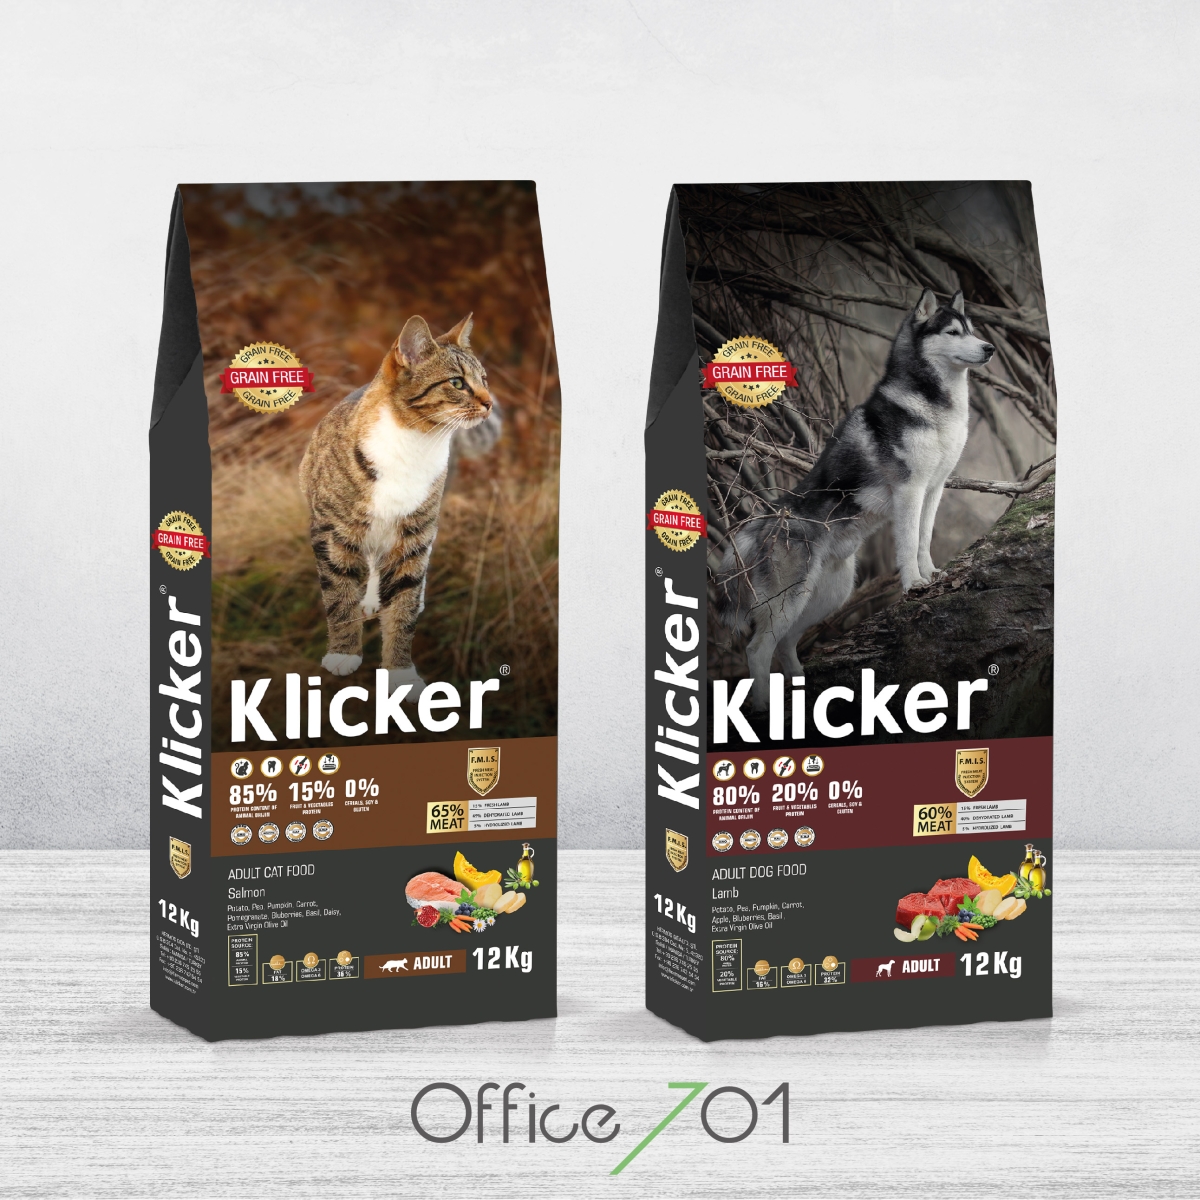 Office701 |  Klicker | Pet Food Package Design